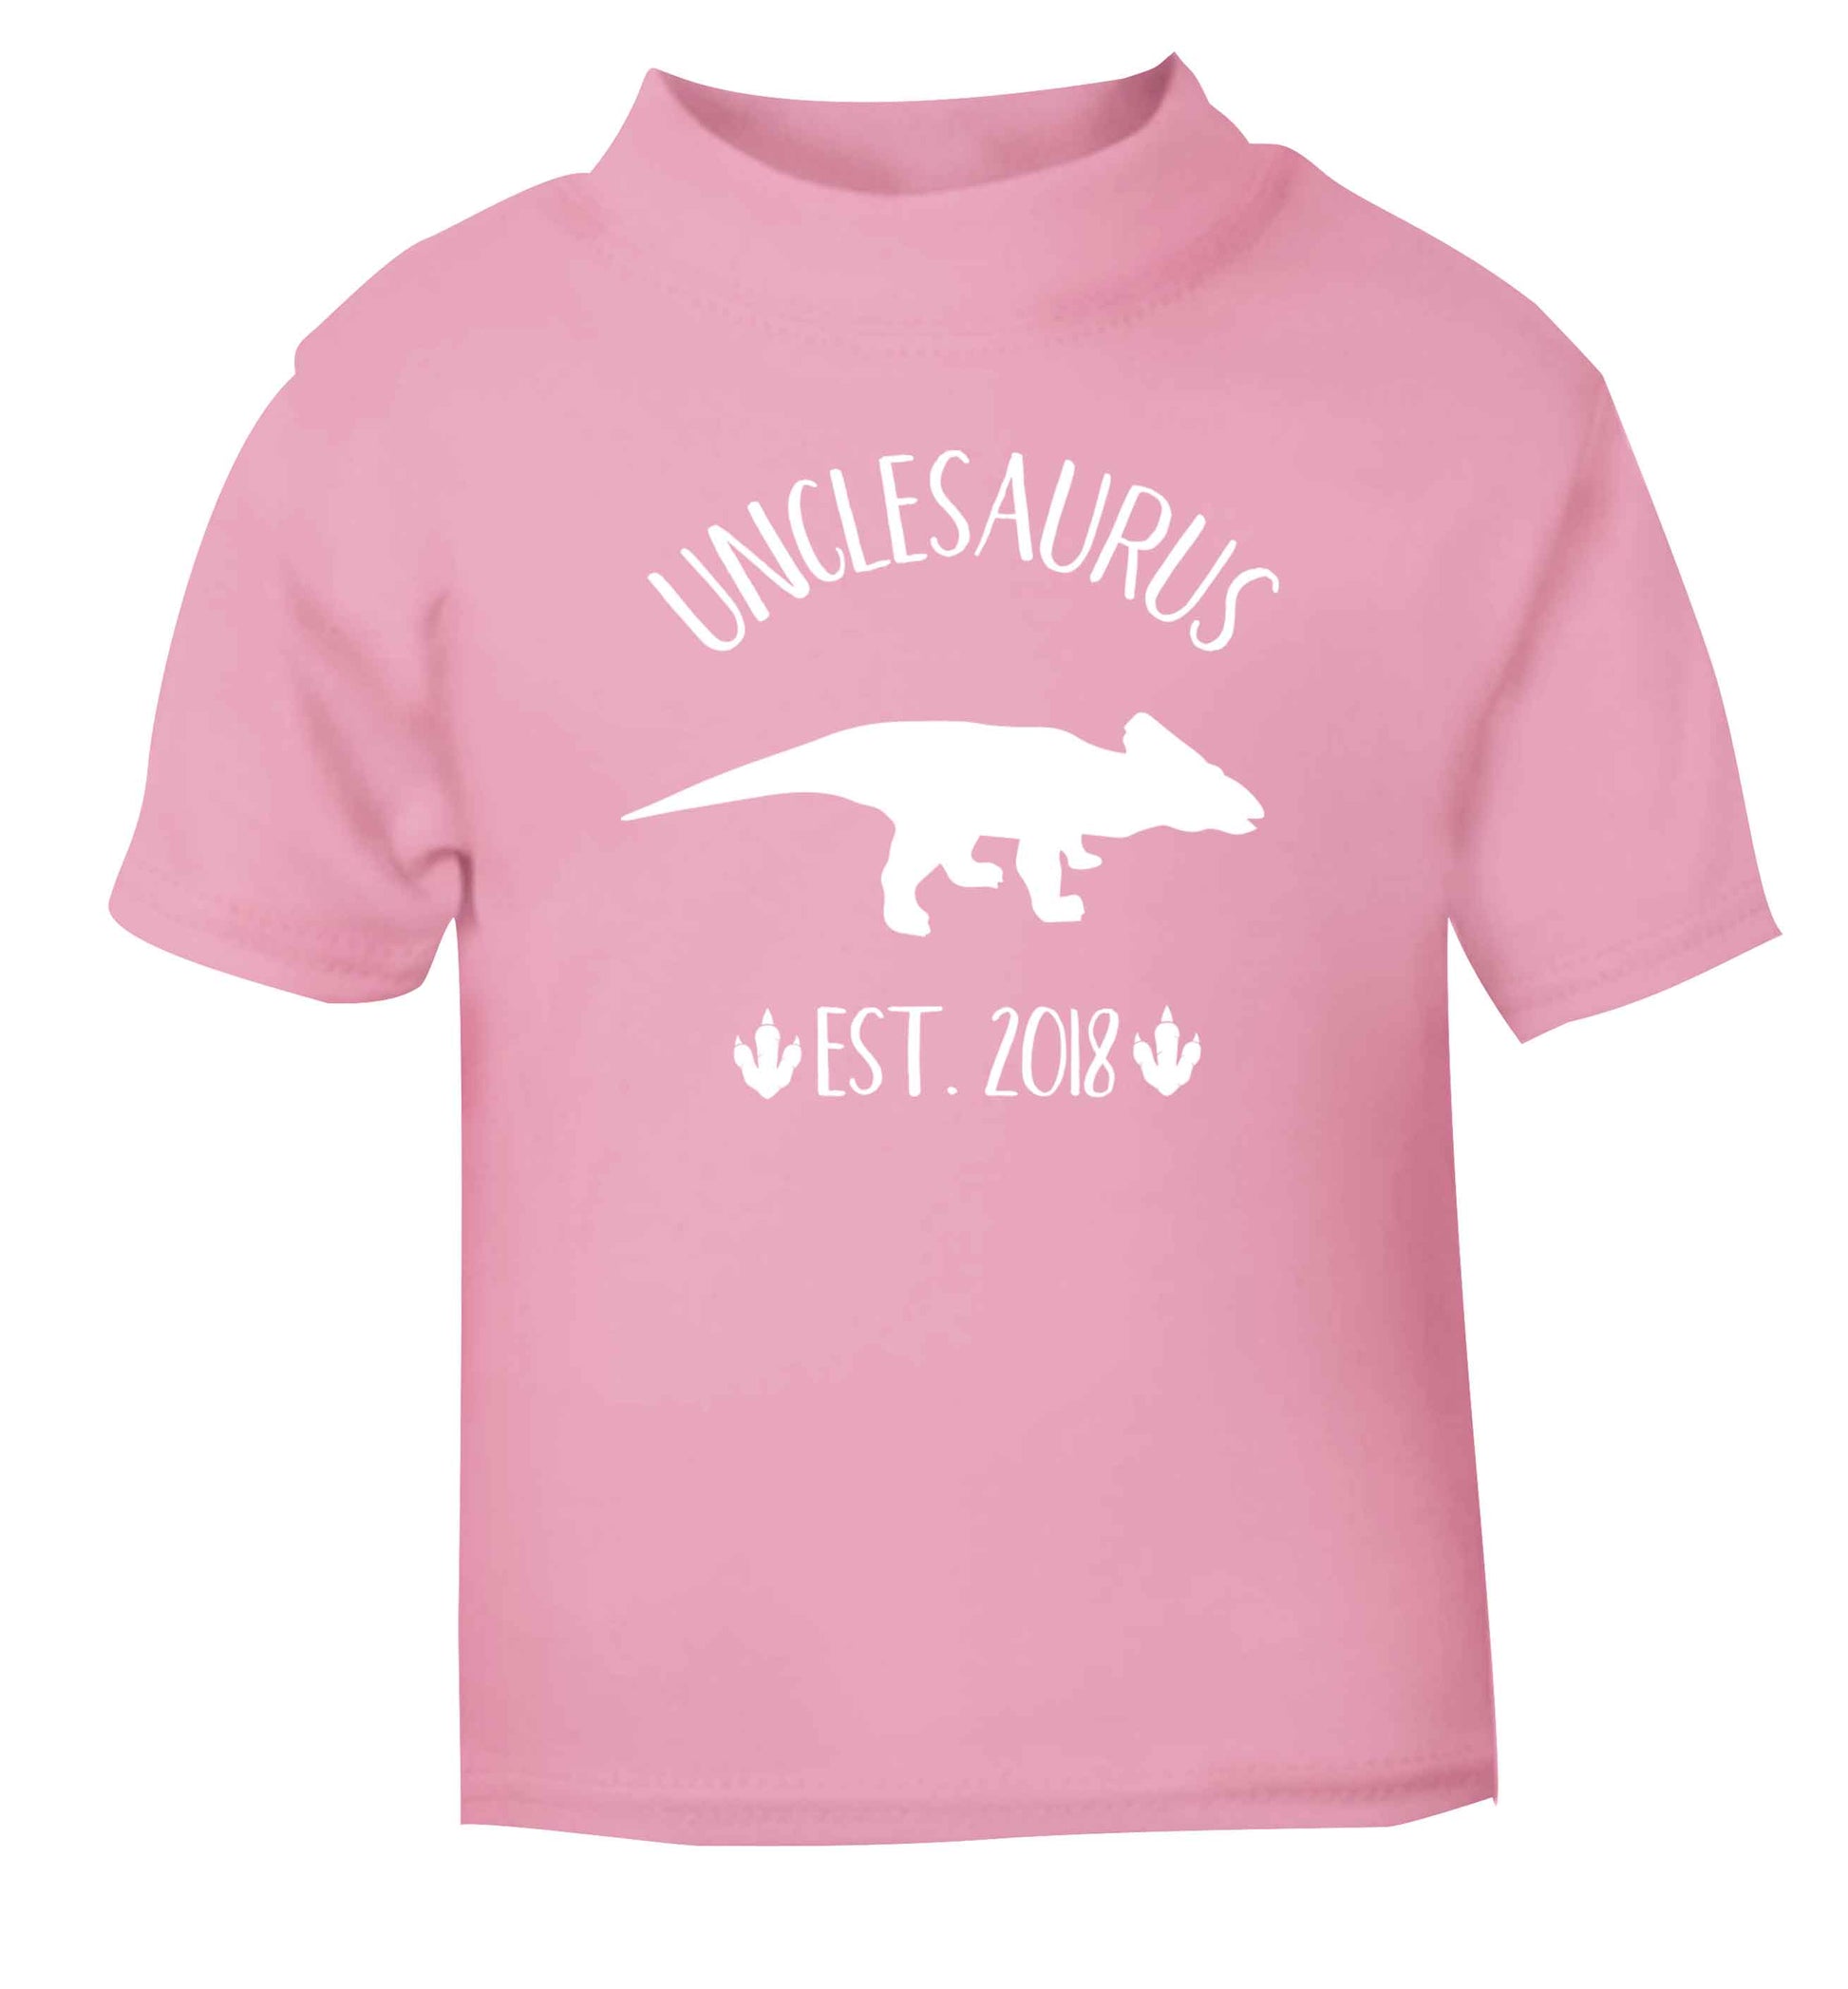 Personalised unclesaurus since (custom date) light pink Baby Toddler Tshirt 2 Years